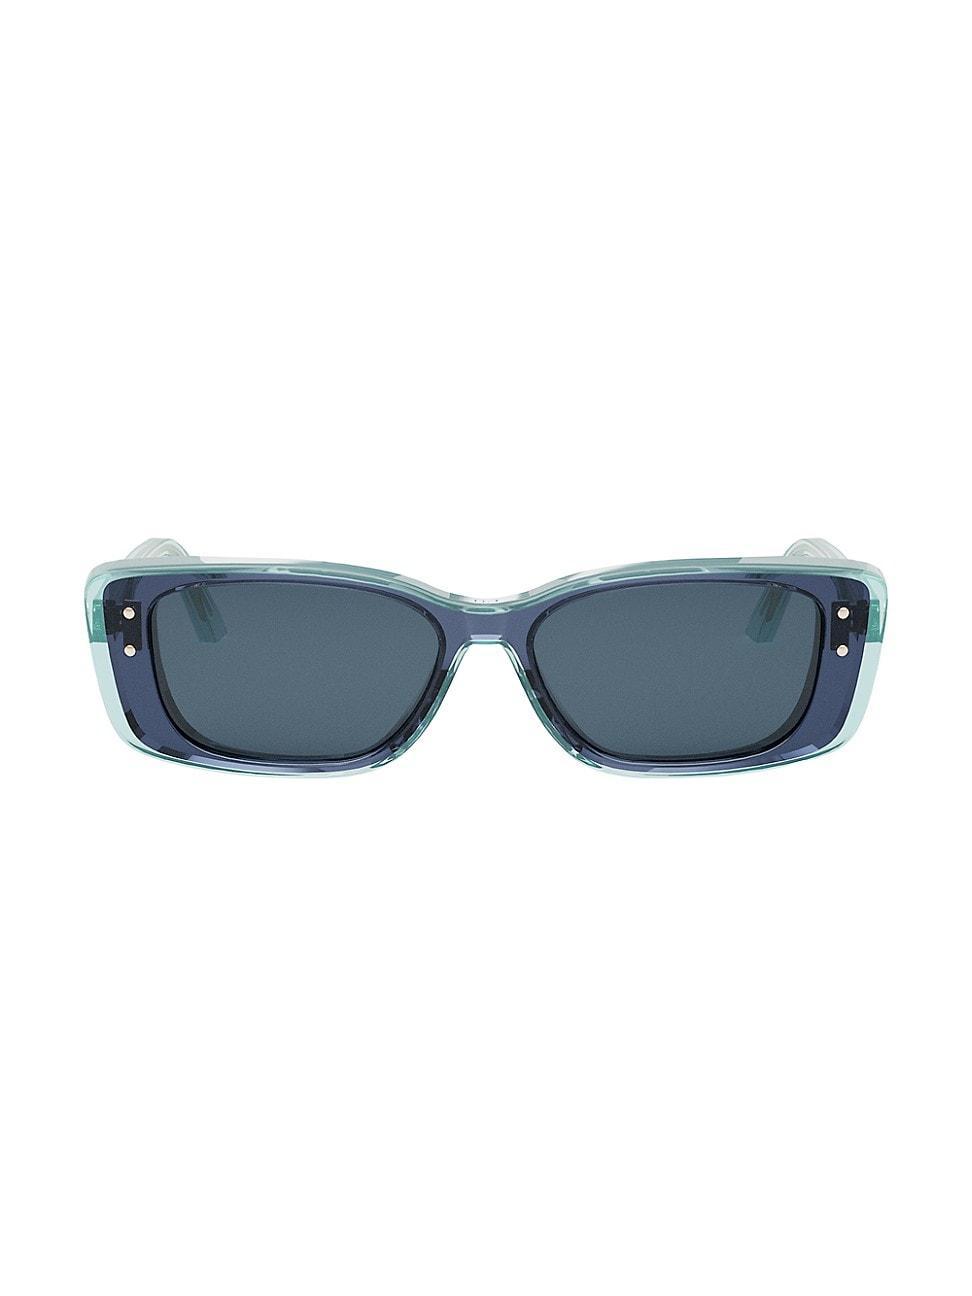 DiorHighlight S2I 53mm Rectangular Sunglasses Product Image